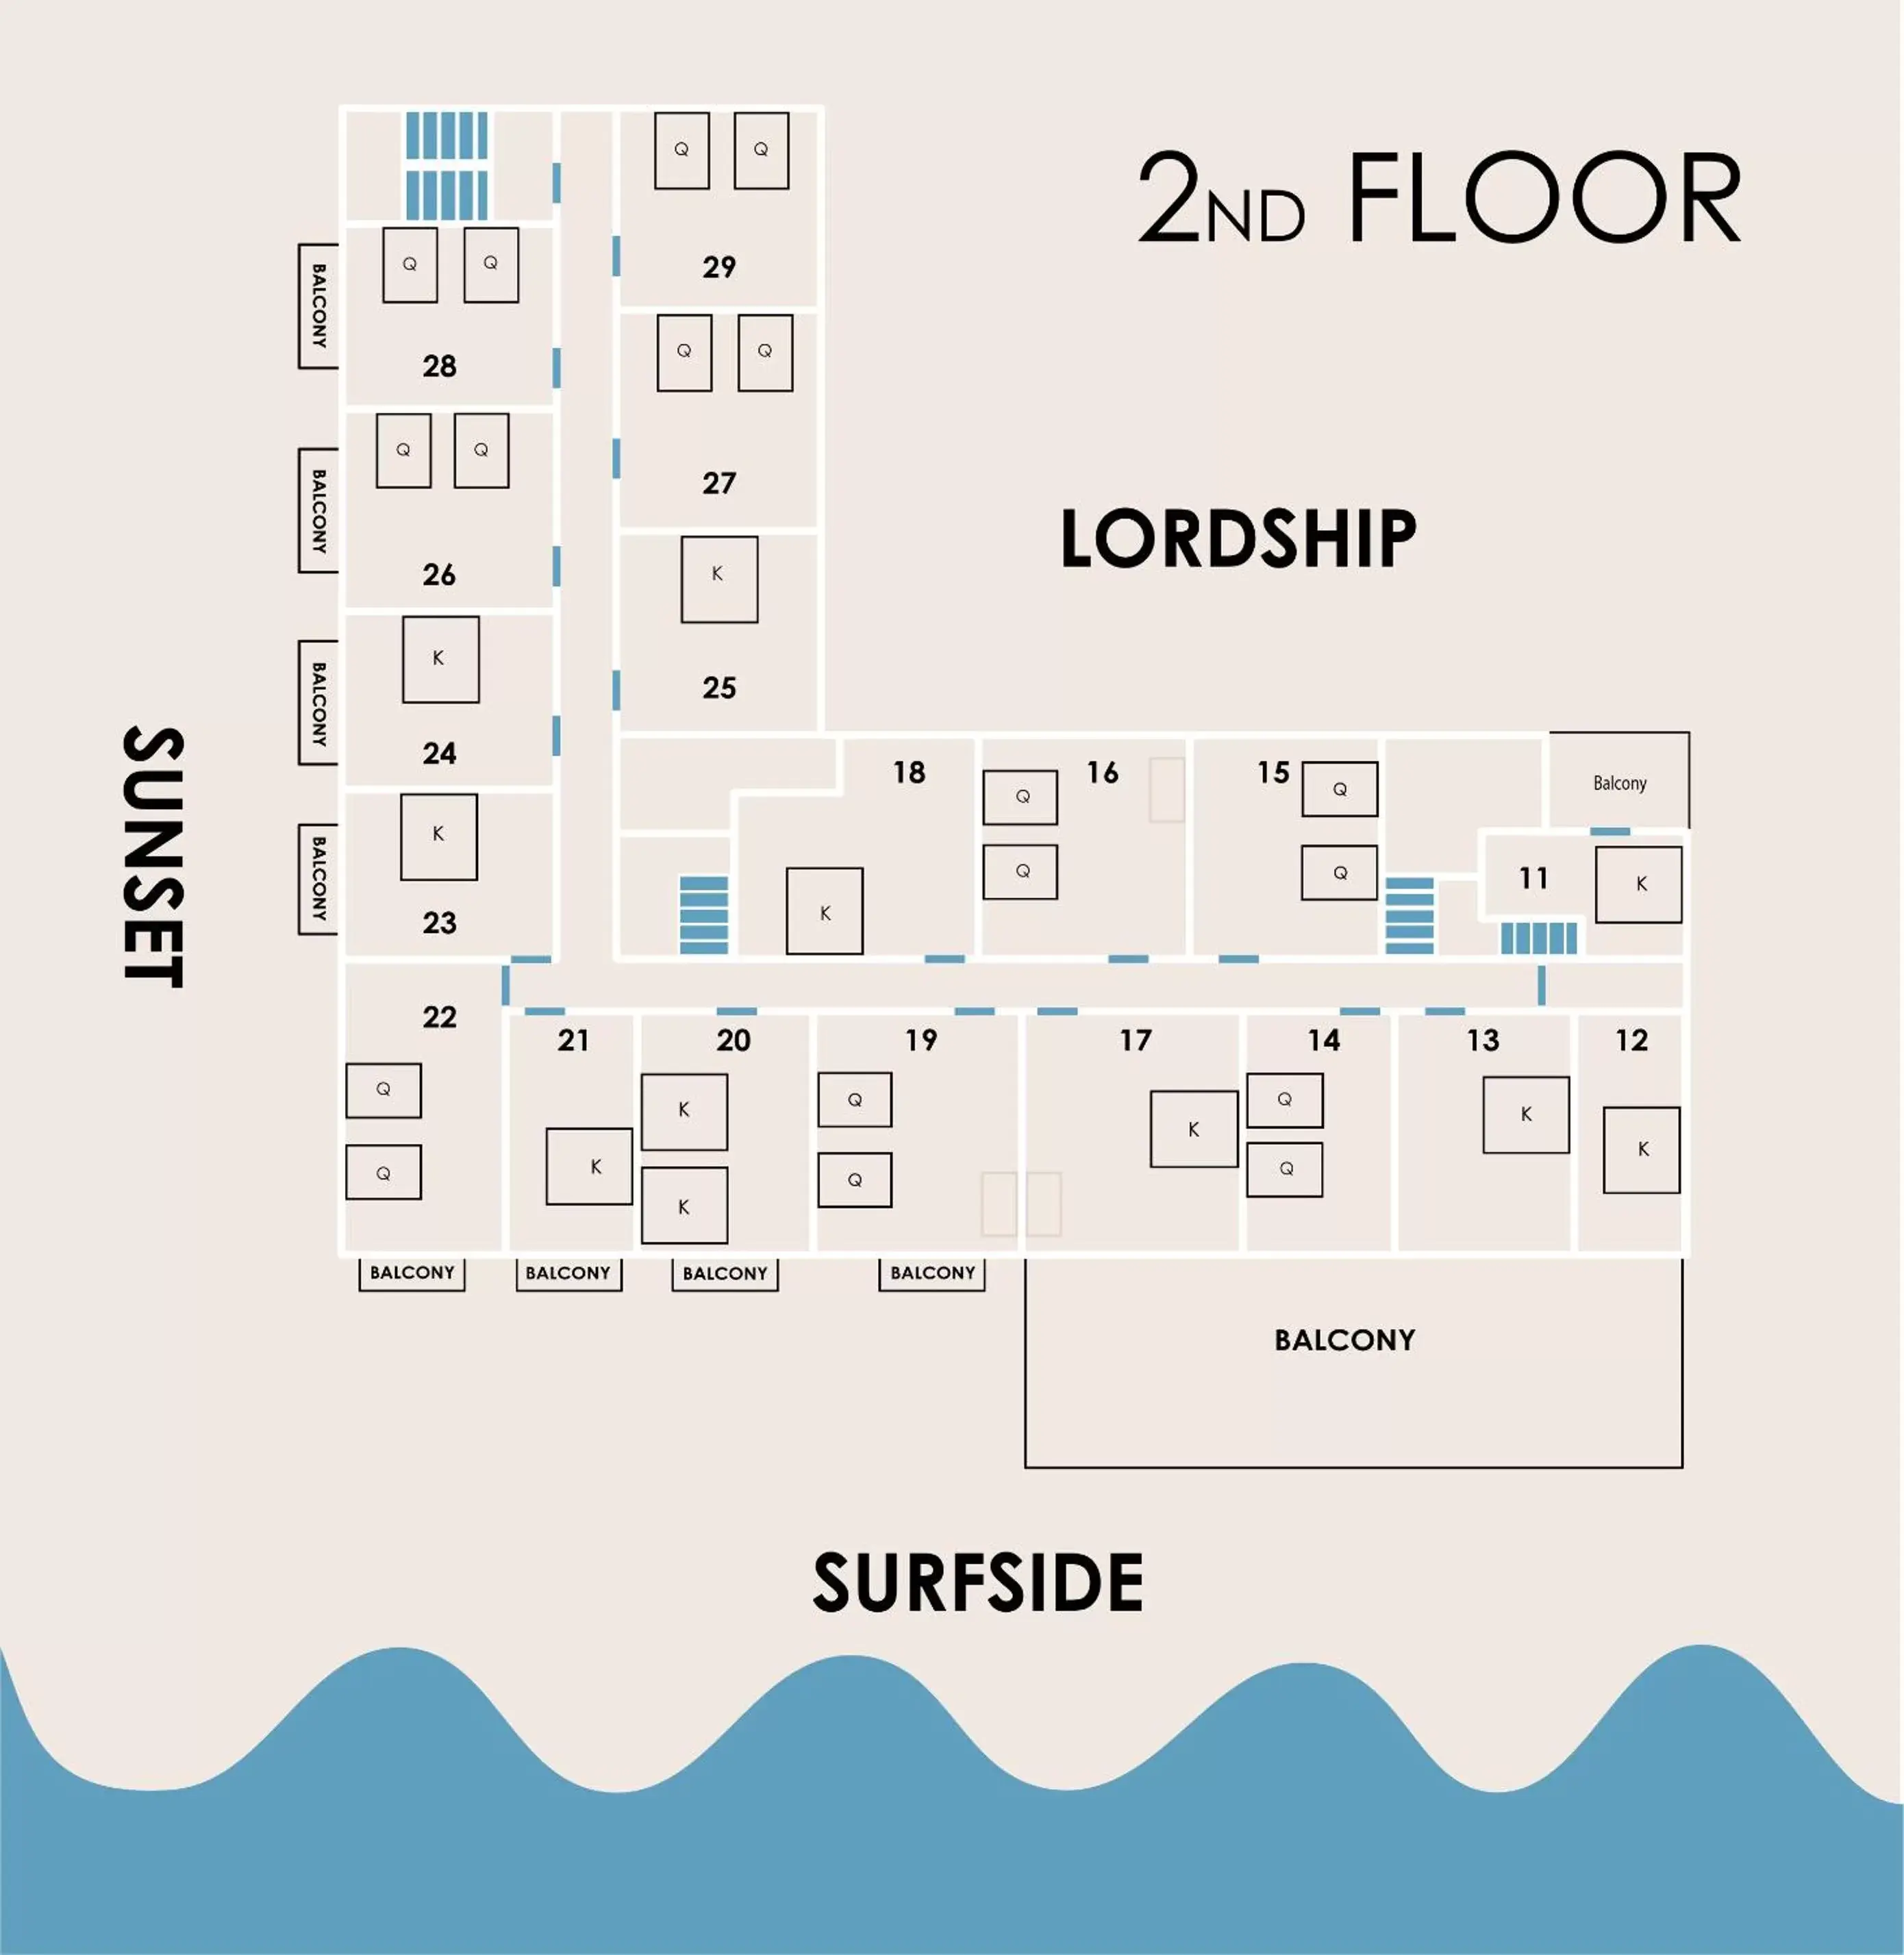 Floor Plan in The Surfside Hotel